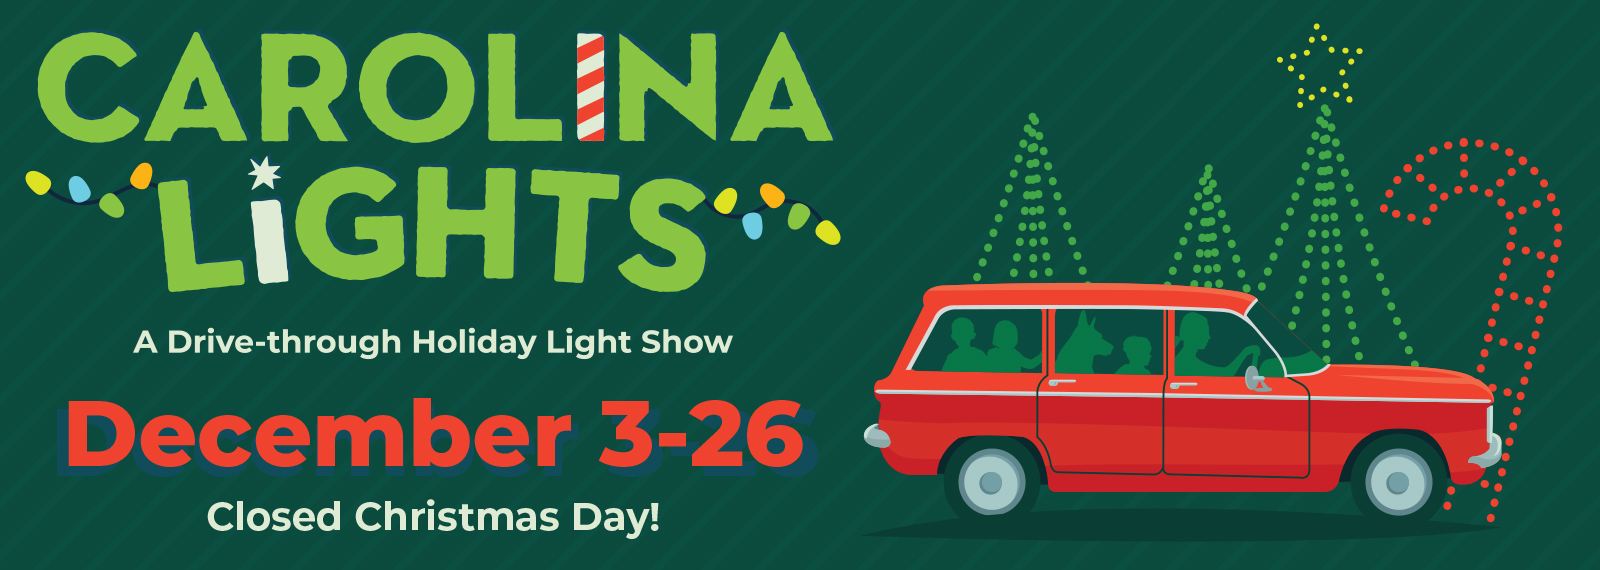 Carolina Lights: A Drive-through Holiday Light Show